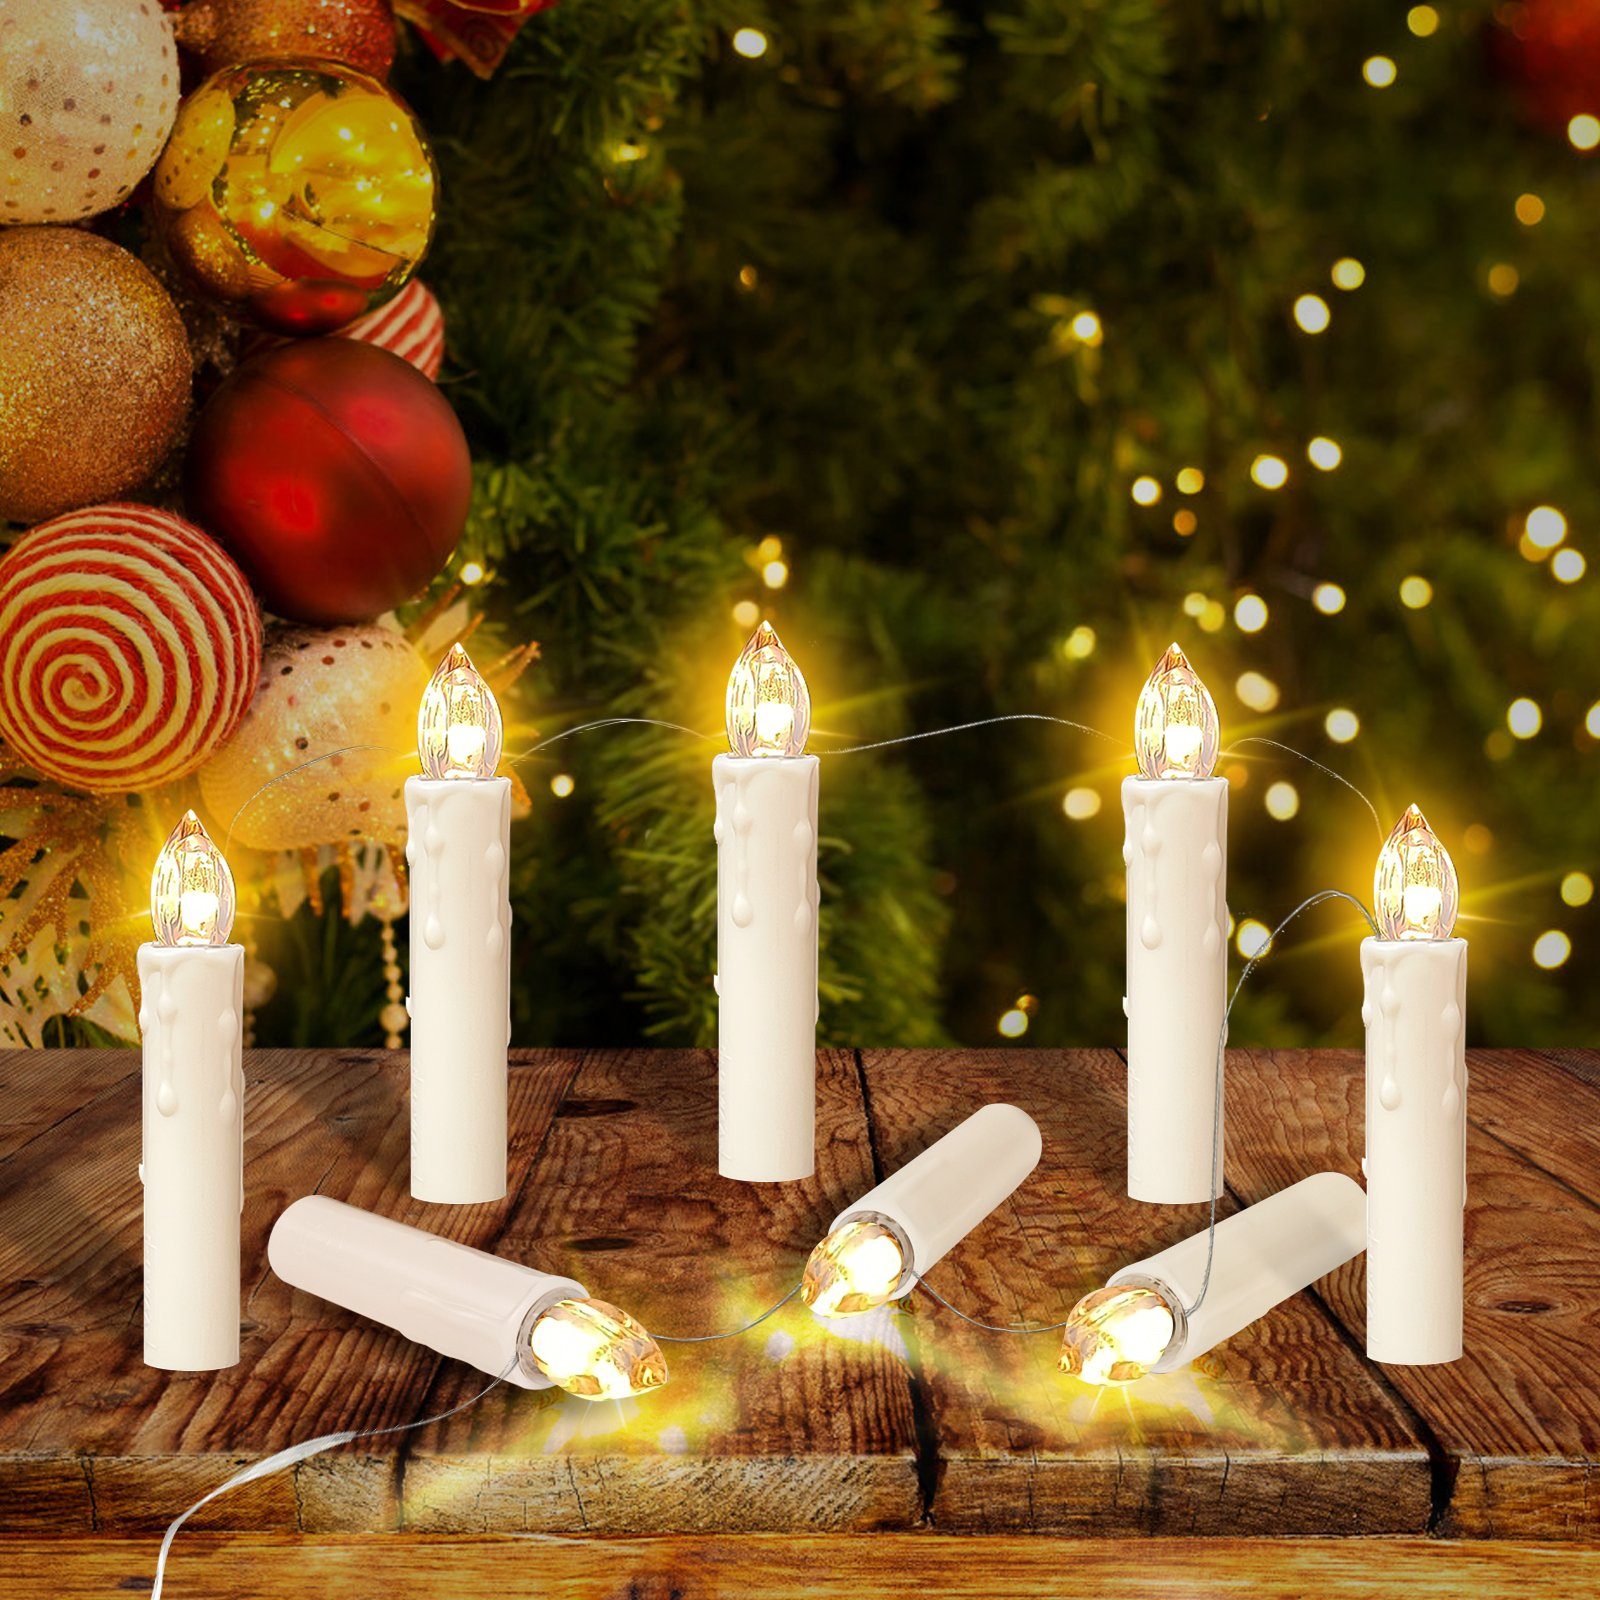 OZAVO LED-Christbaumkerzen 30Leds, Weihnachtskerzen Lichterkette Kabel USB Weihnachtsbeleuchtung